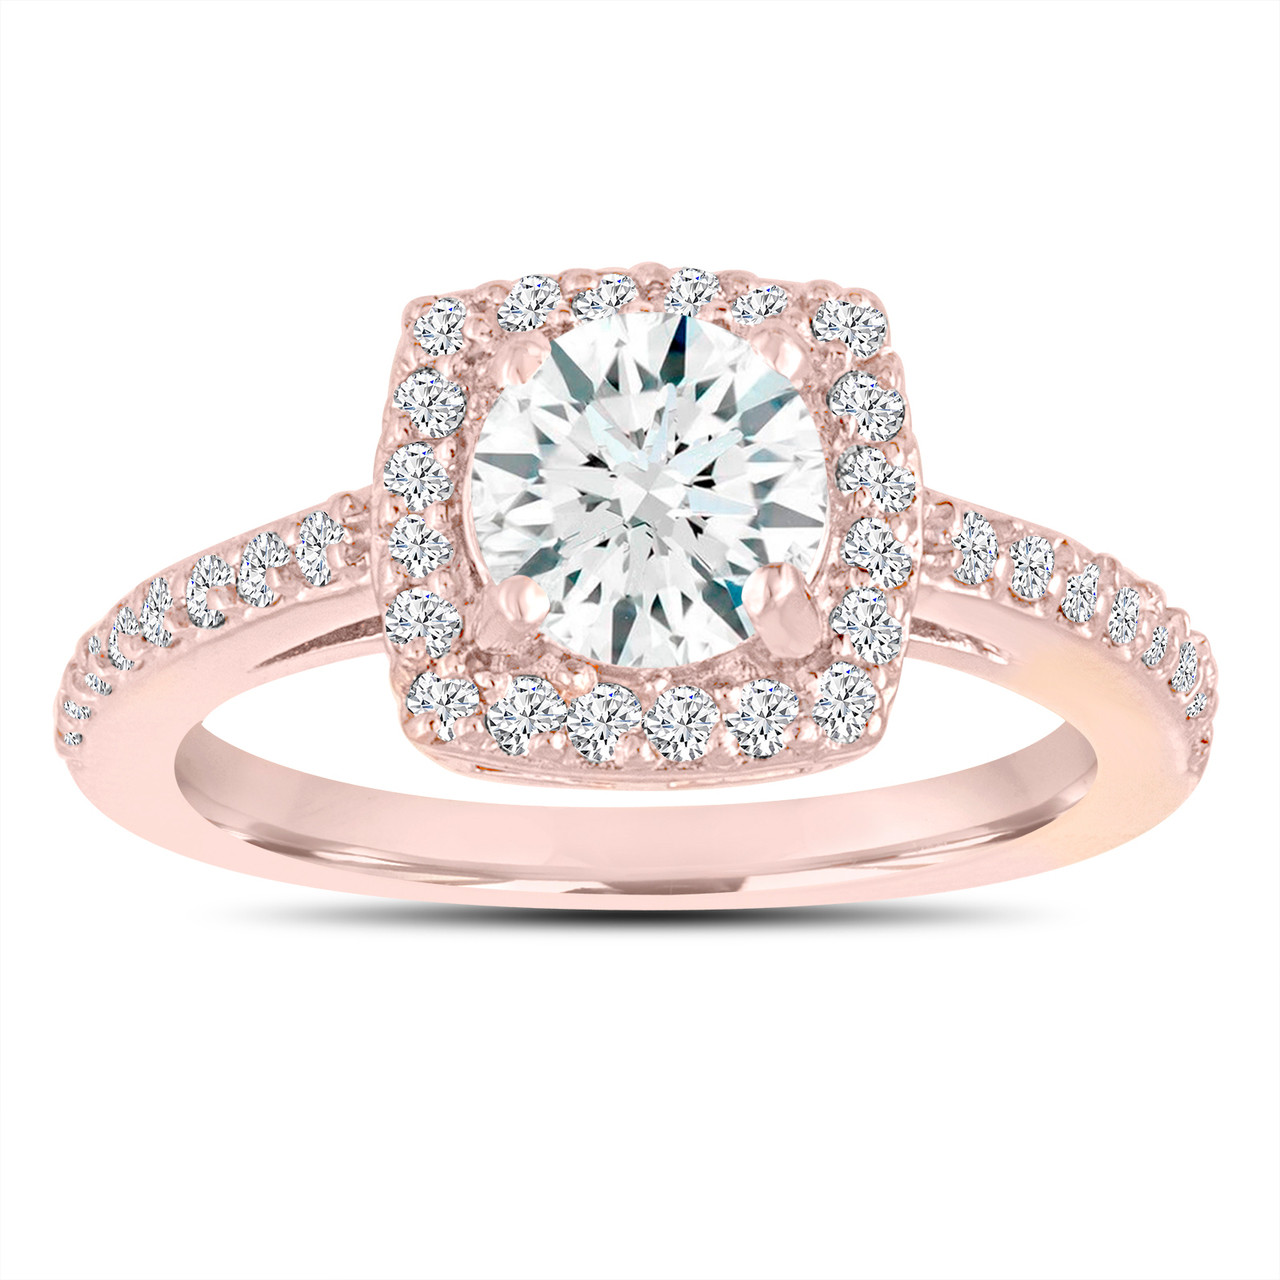 White Sapphire Engagement Ring, Wedding Ring 14K Rose Gold 1.38 Carat Certified Pave Halo Handmade